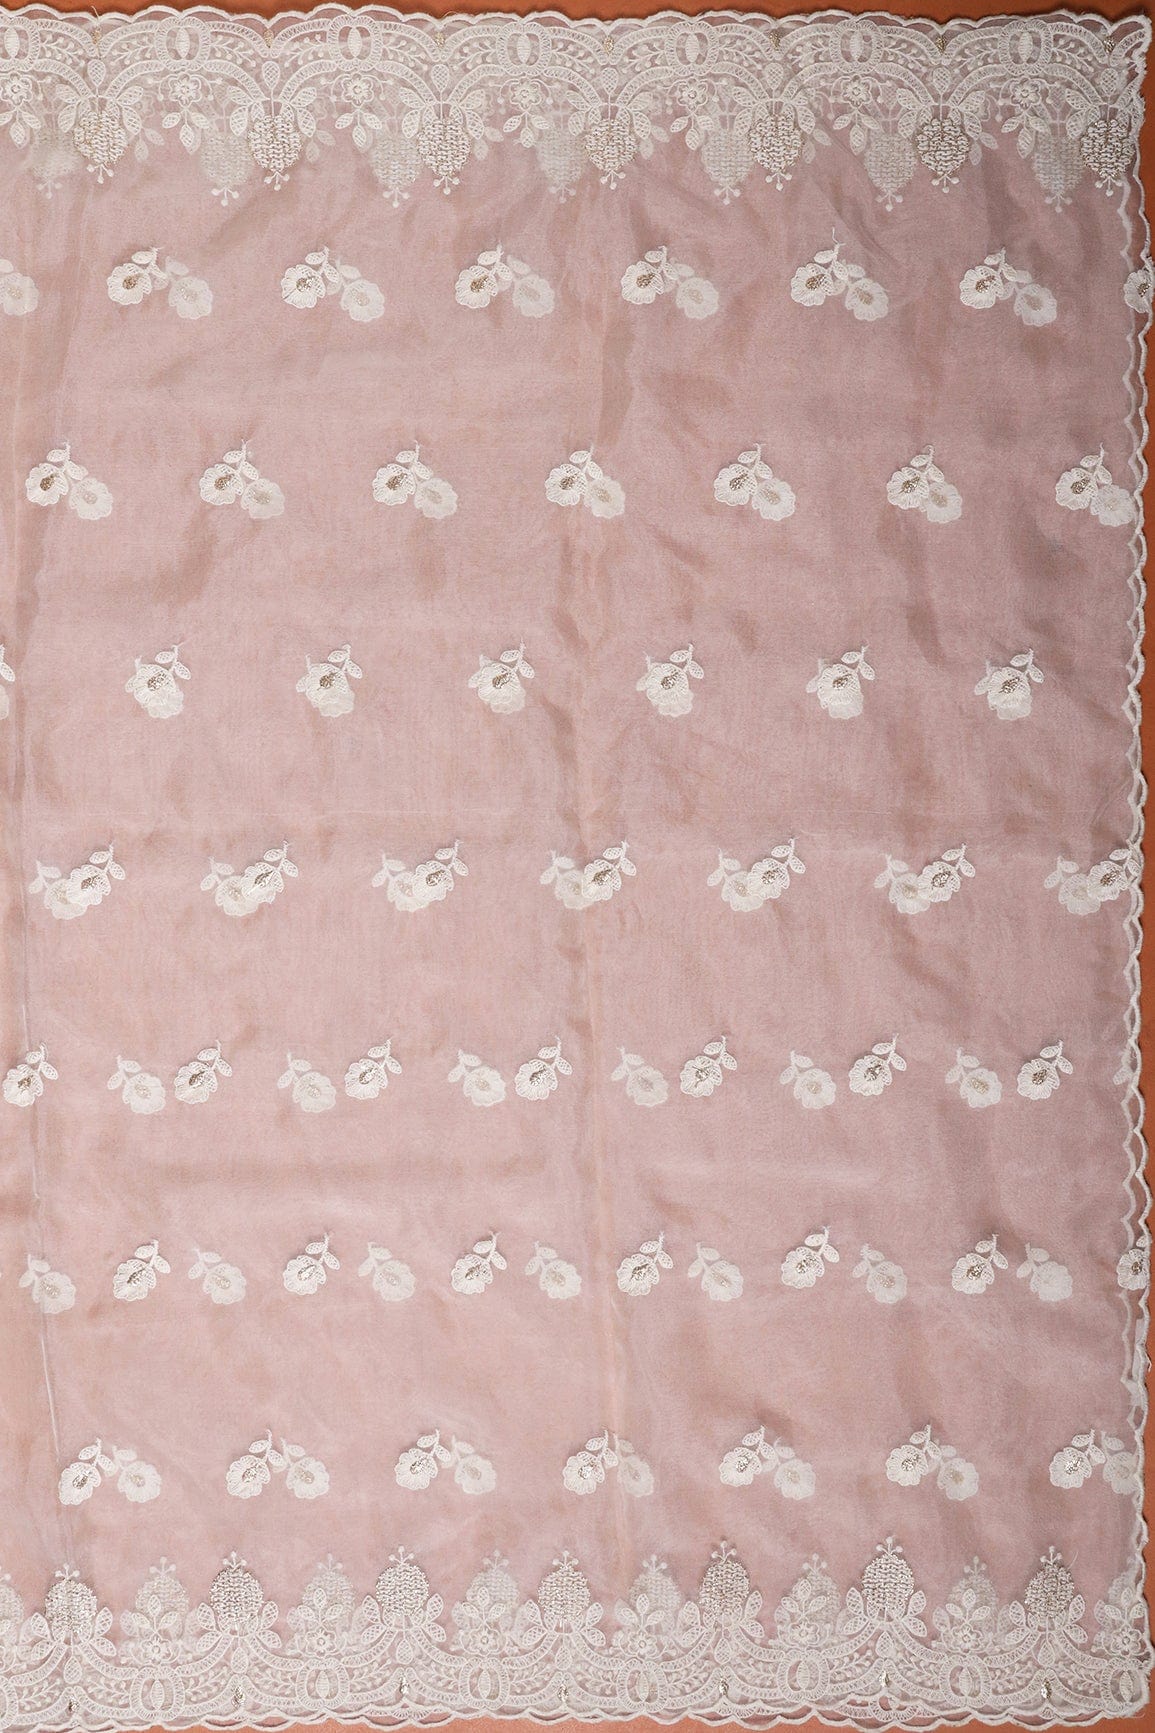 doeraa Dupatta White Thread With Gold Zari Floral Lucknowi Embroidery Work On White Organza Dupatta With Border